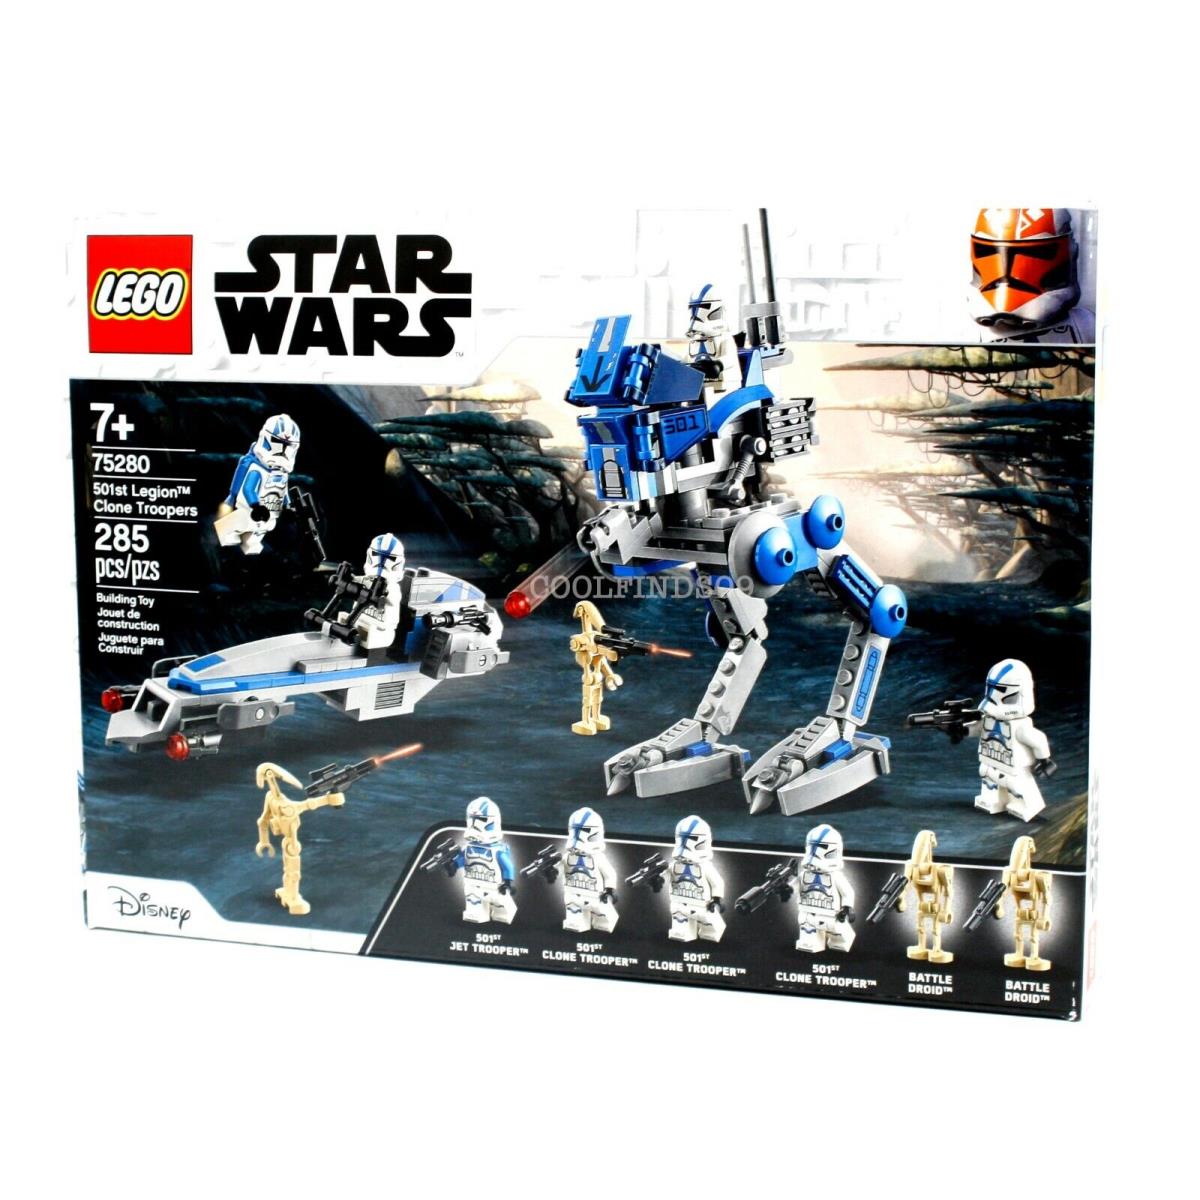 Lego Star Wars 75280 501st Legion Clone Troopers At-rt Walker Barc Speeder Droid